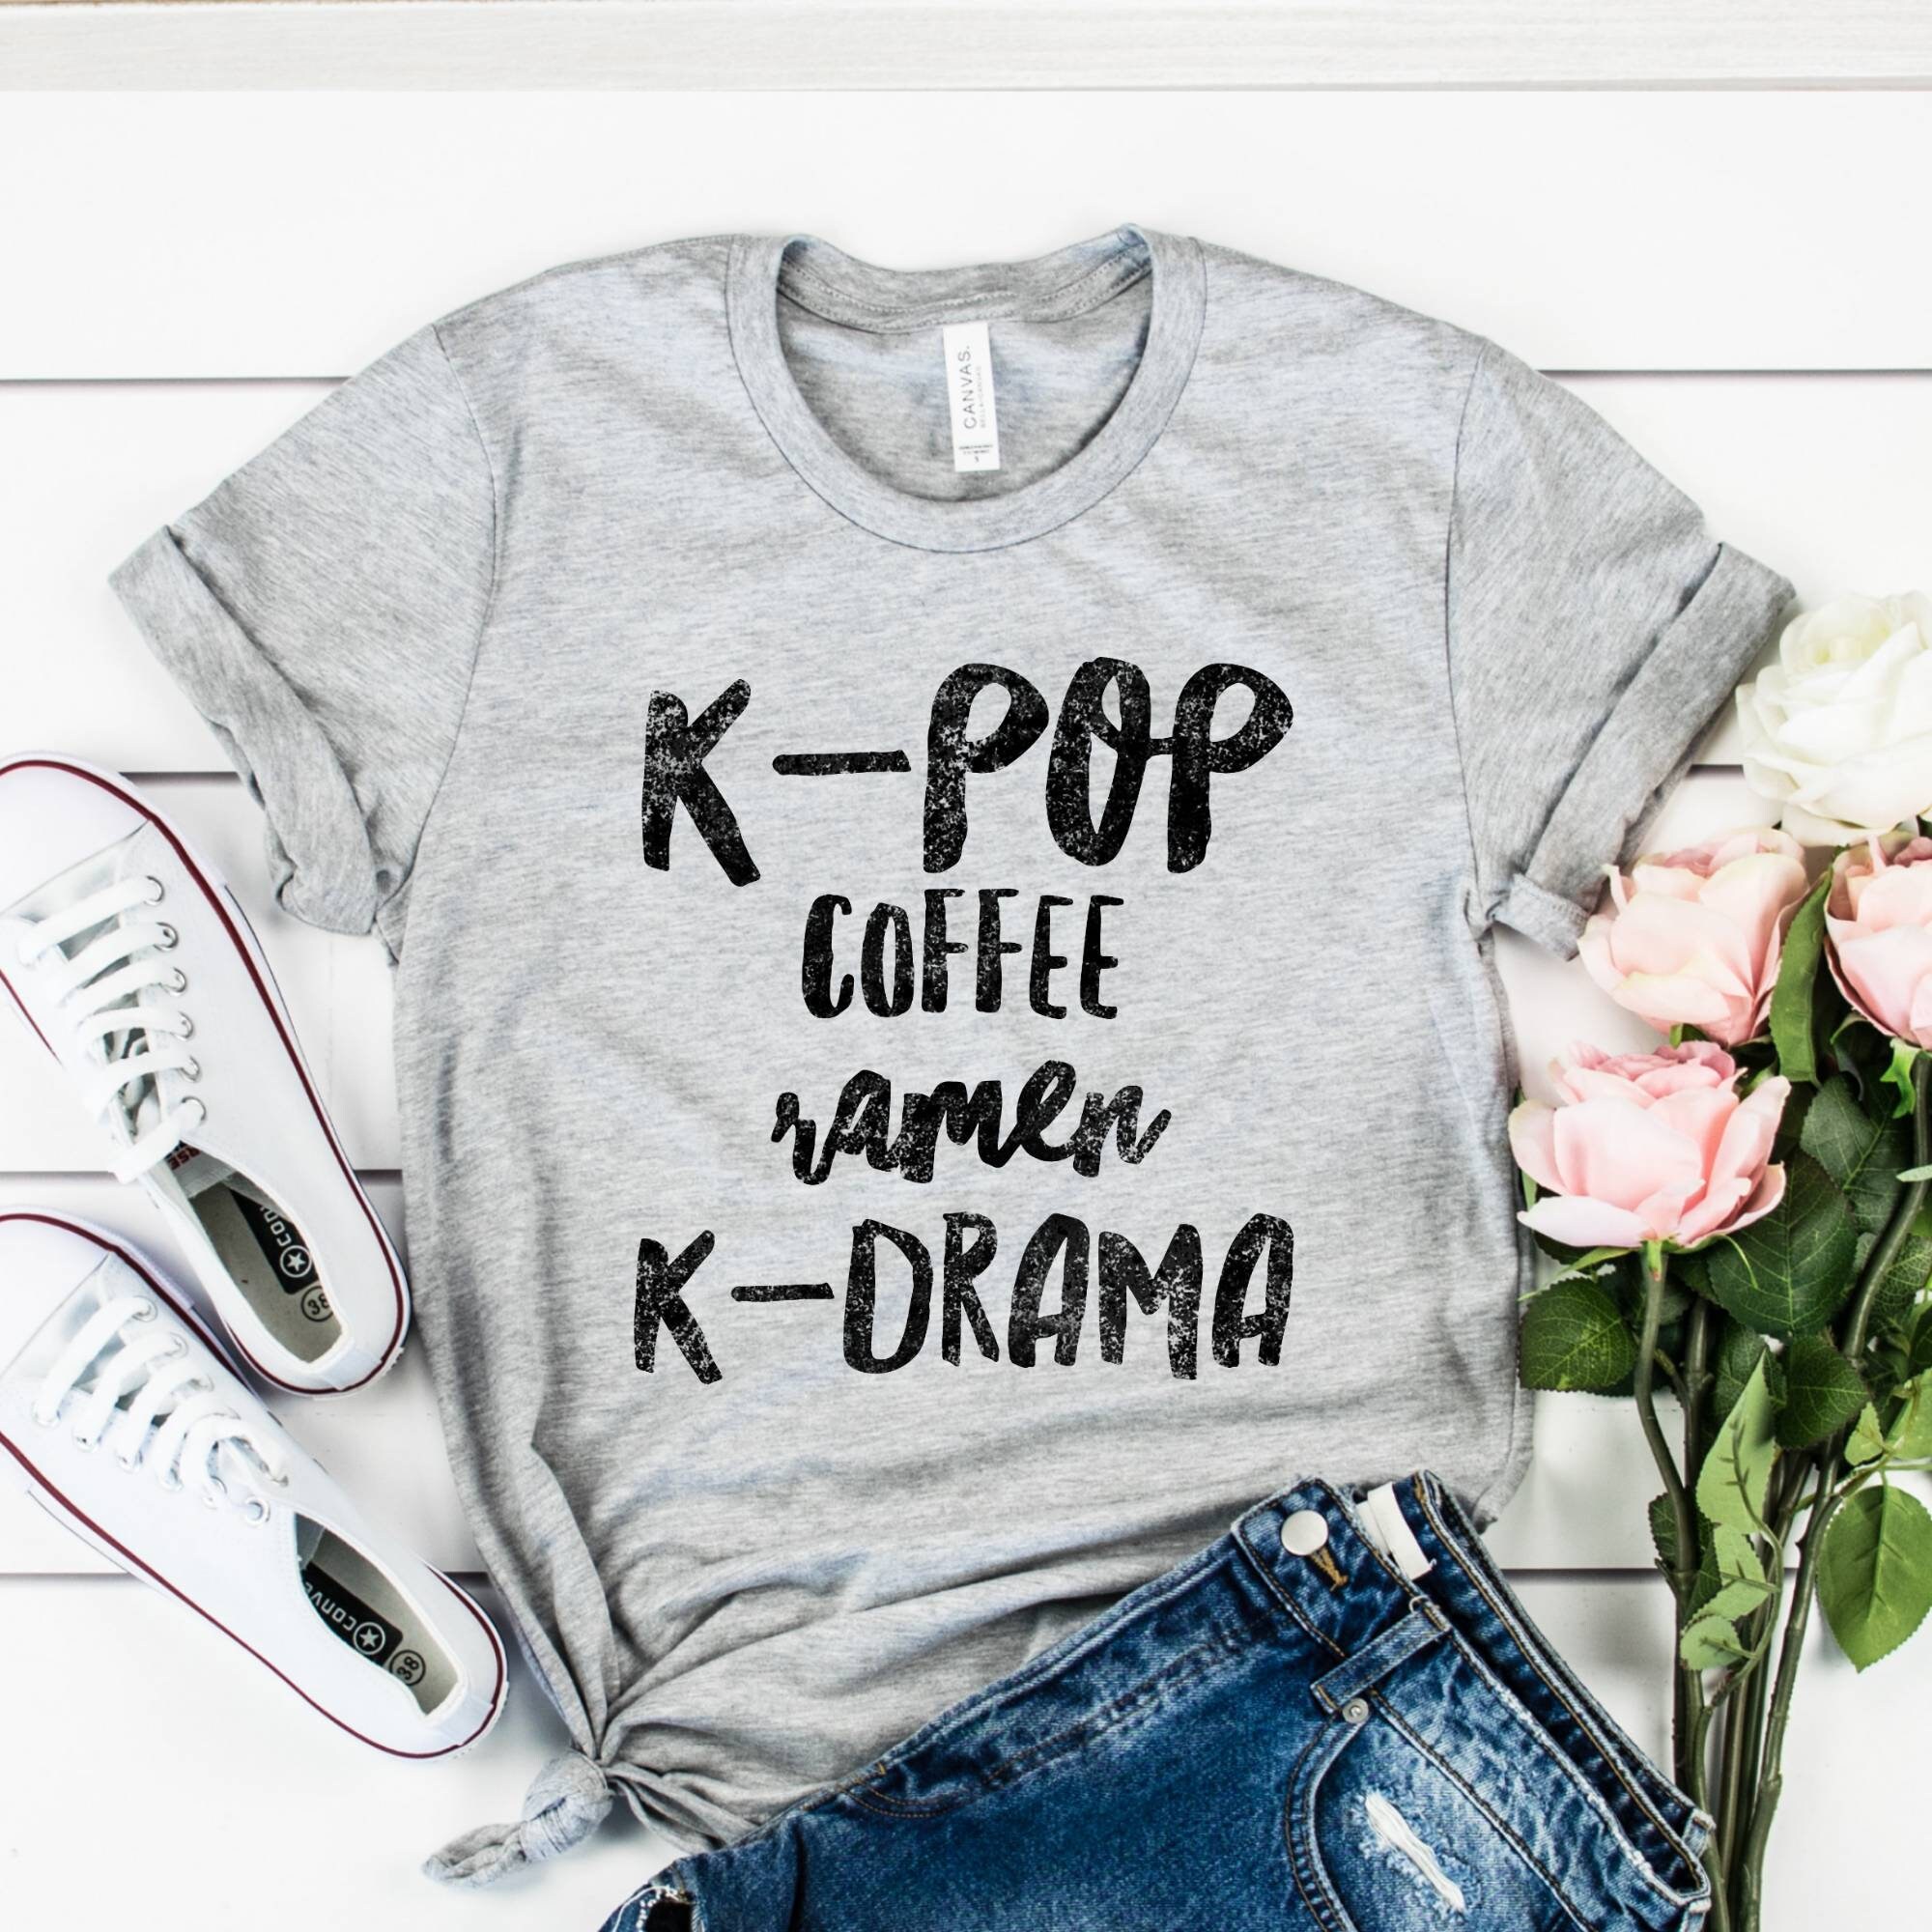 K-Pop Coffee Ramen K-Drama Shirt, Hoodie, Sweatshirt, Funny Korean T-Shirt, Christmas Gift Korean, Kpop Kdrama Distressed Tanks